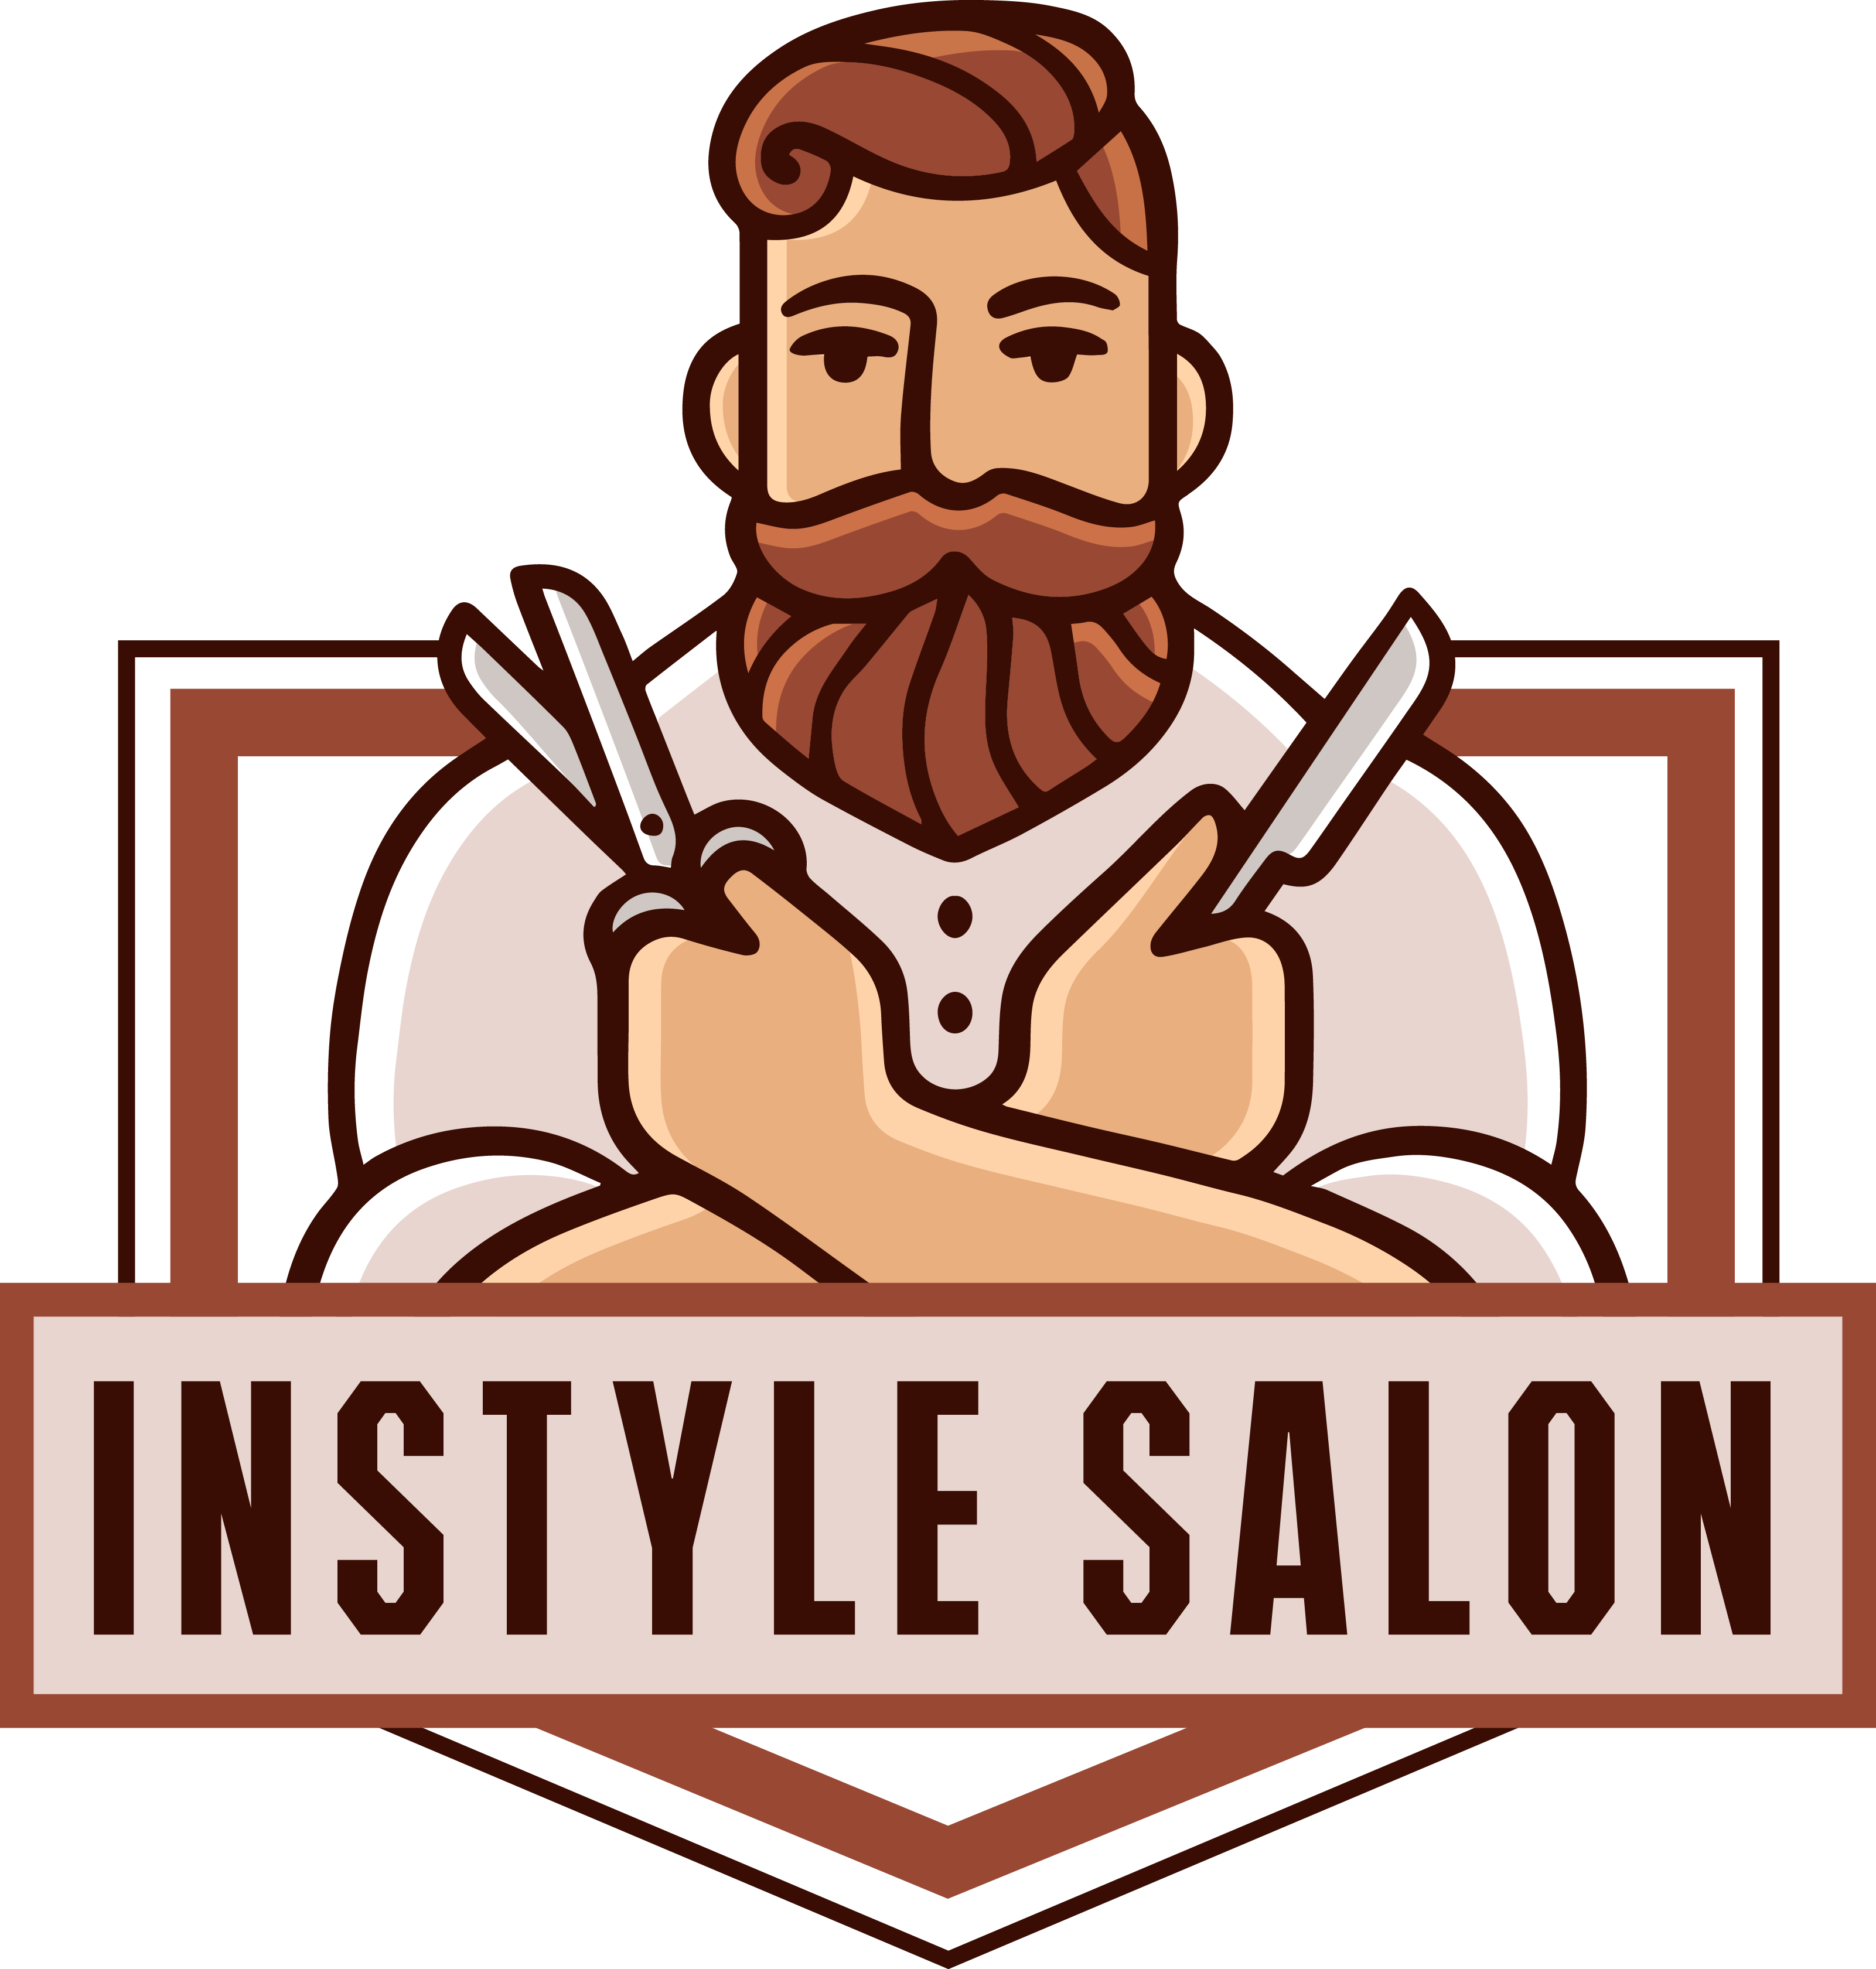 men hair salon clip art